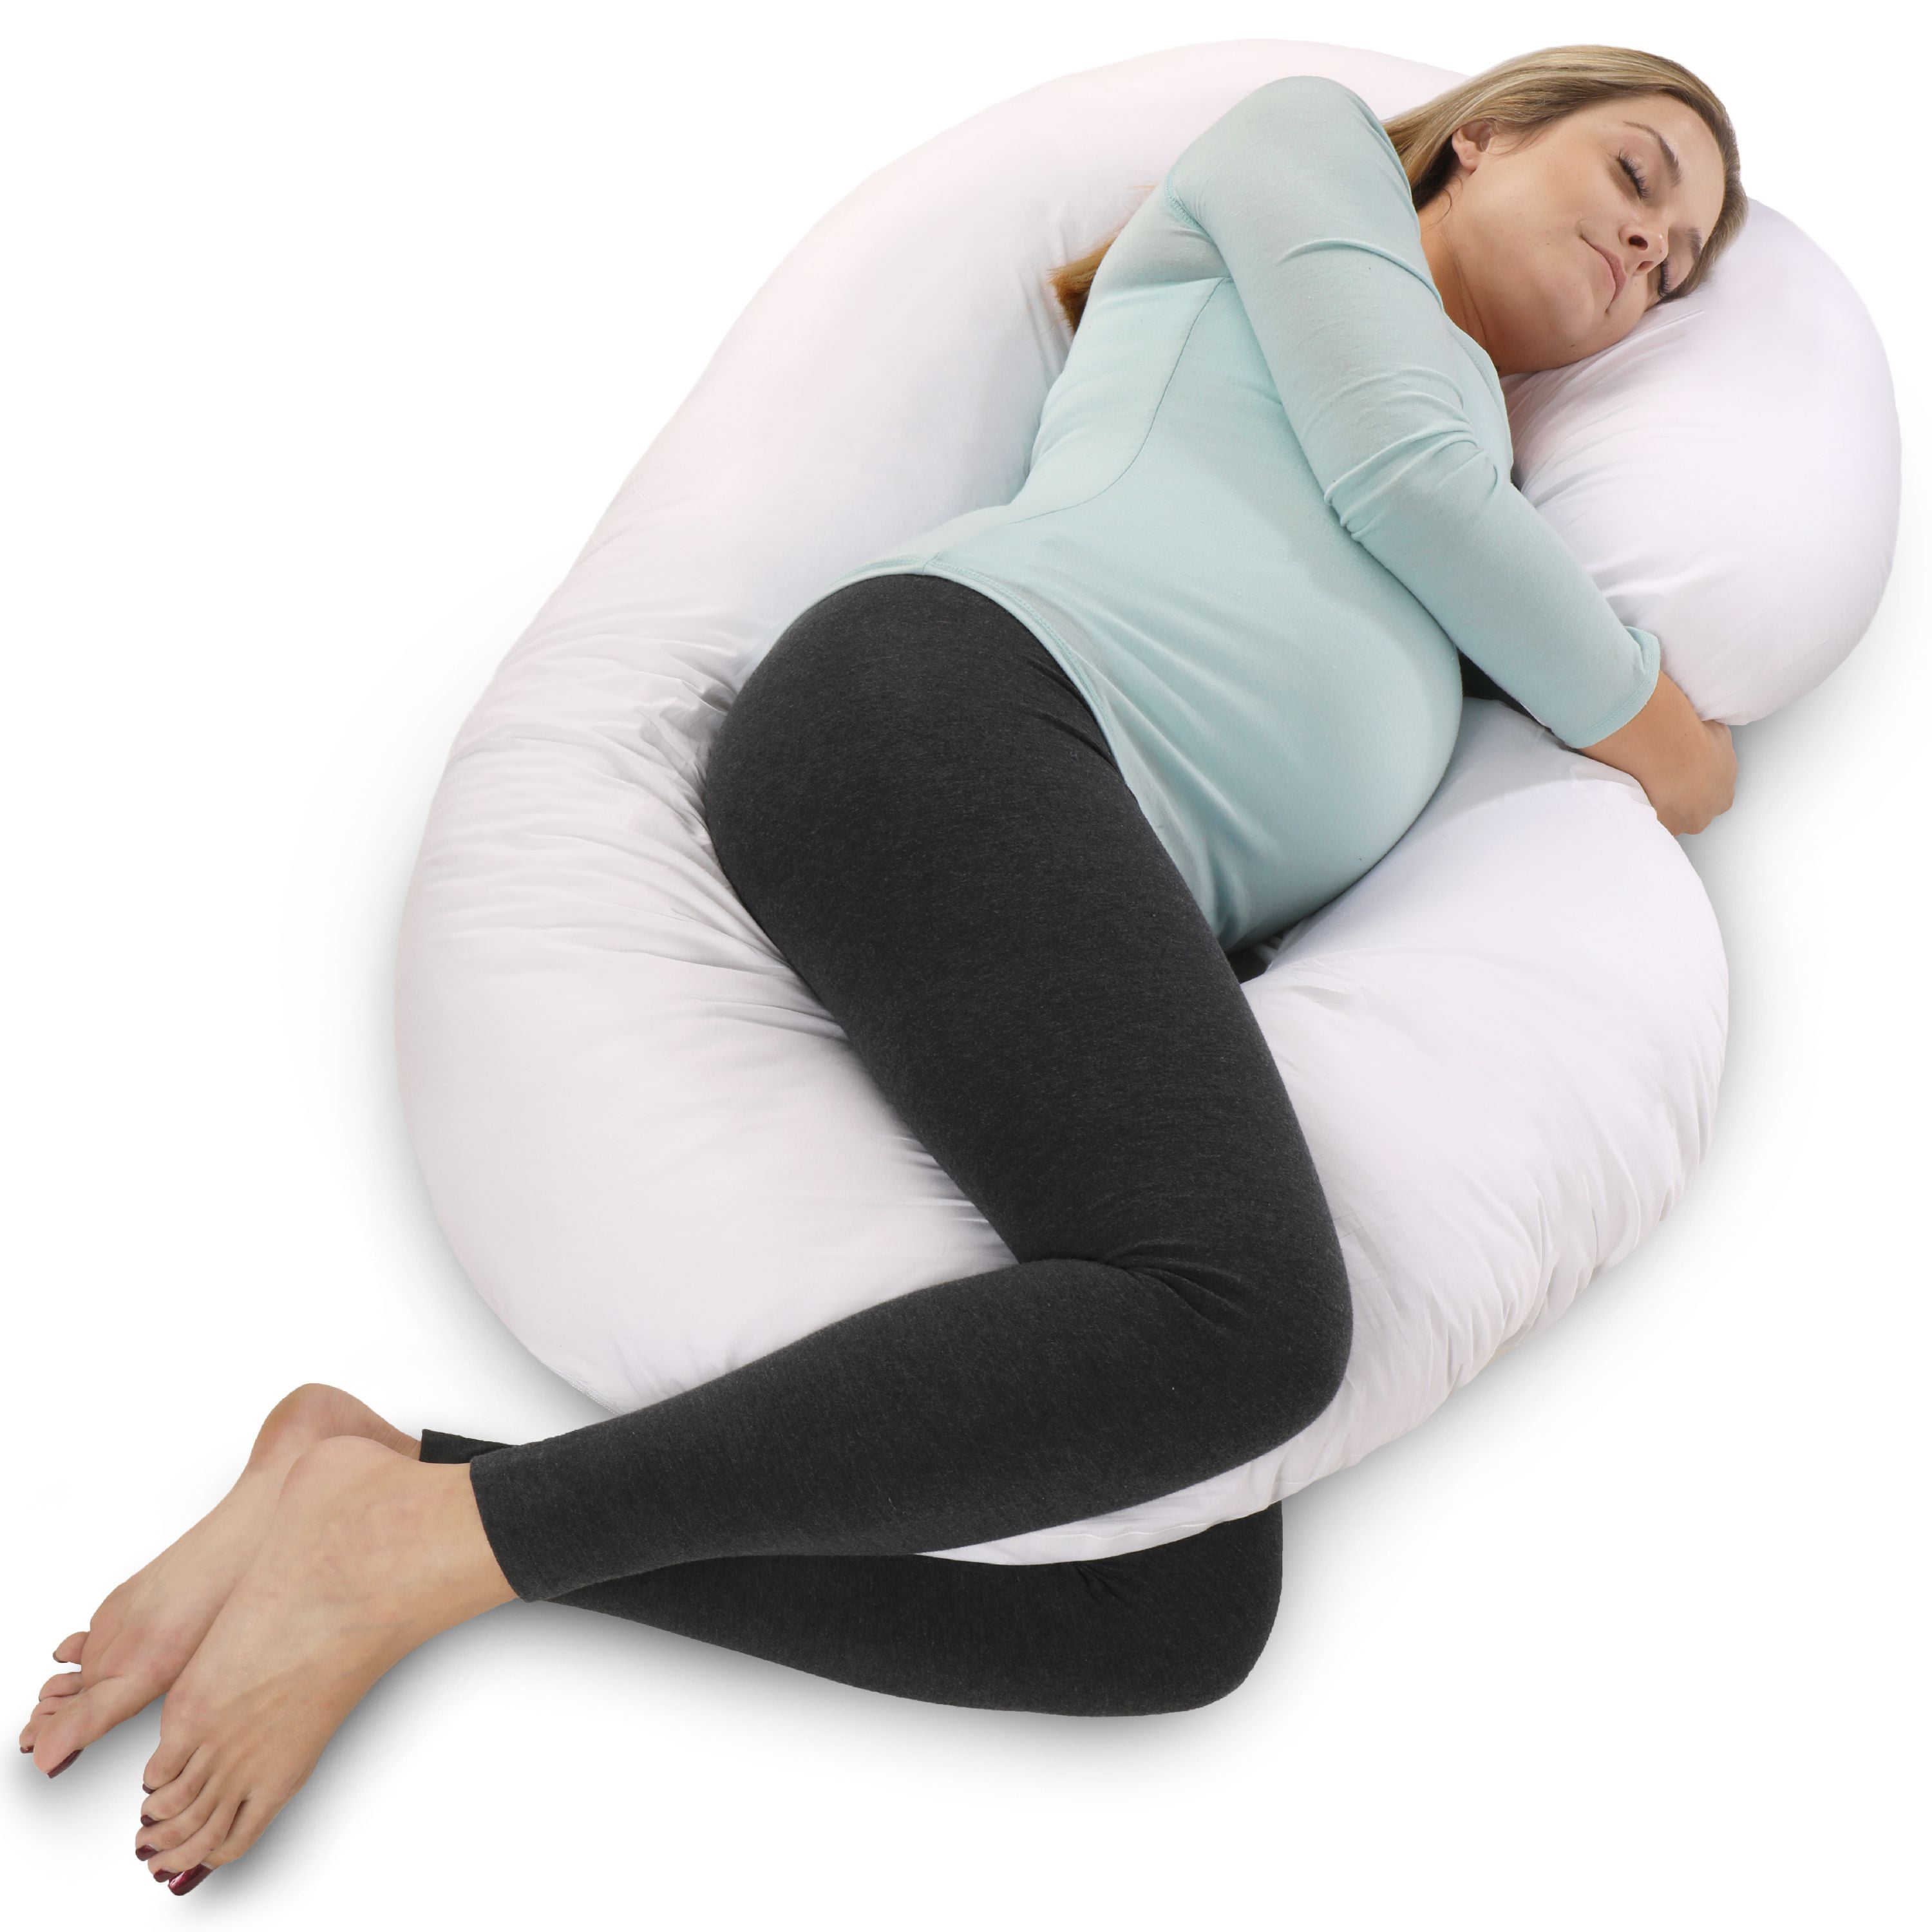 Купить подушку в воронеже. Боди Пиллоу подушка. Подушка для беременных. Подушка для беременных для сна. Подушечка для беременных.